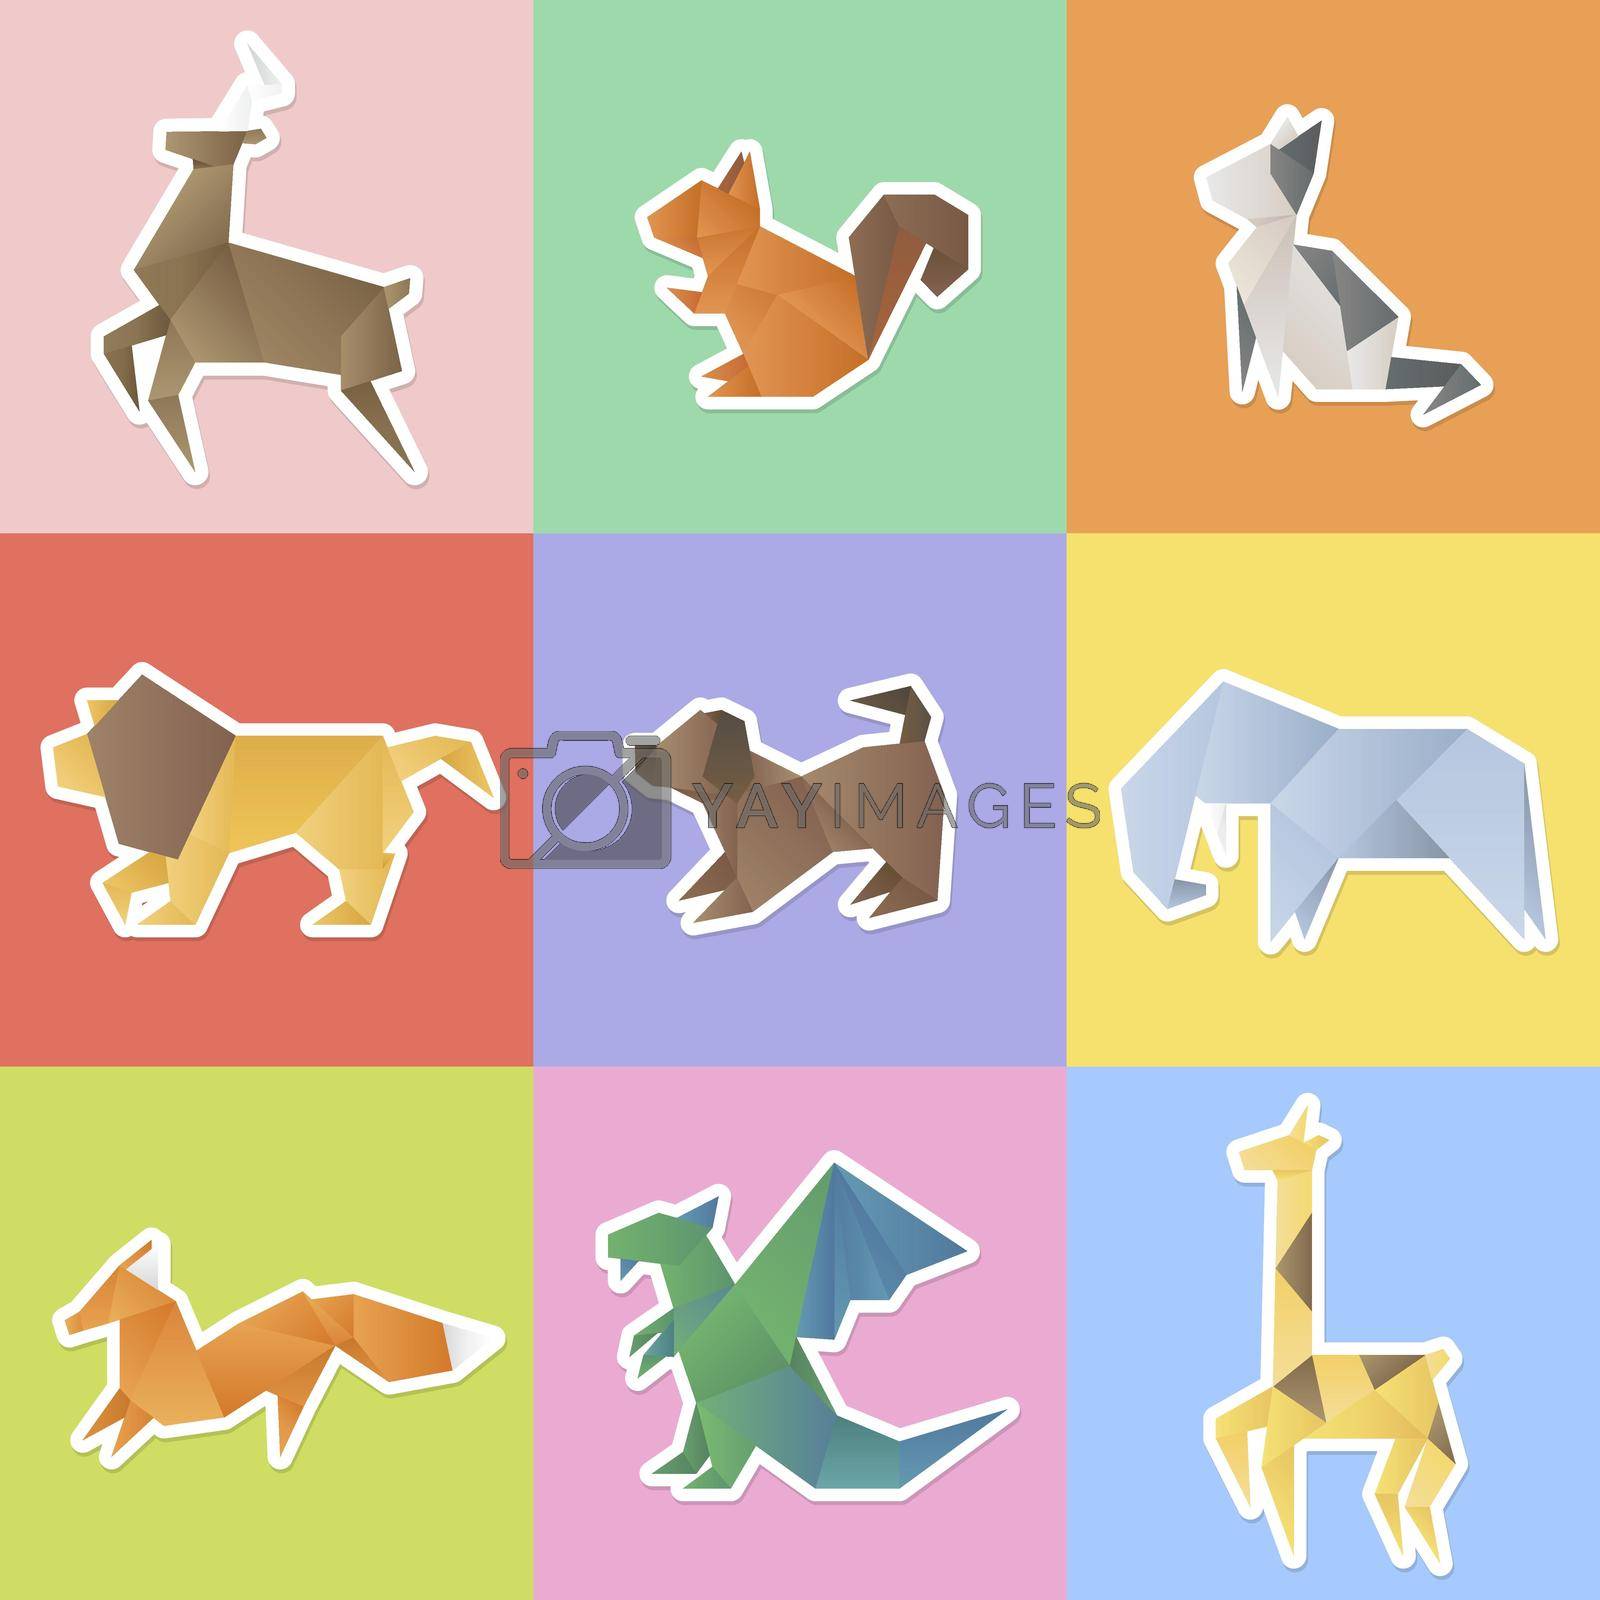 Origami animals sticker vector set